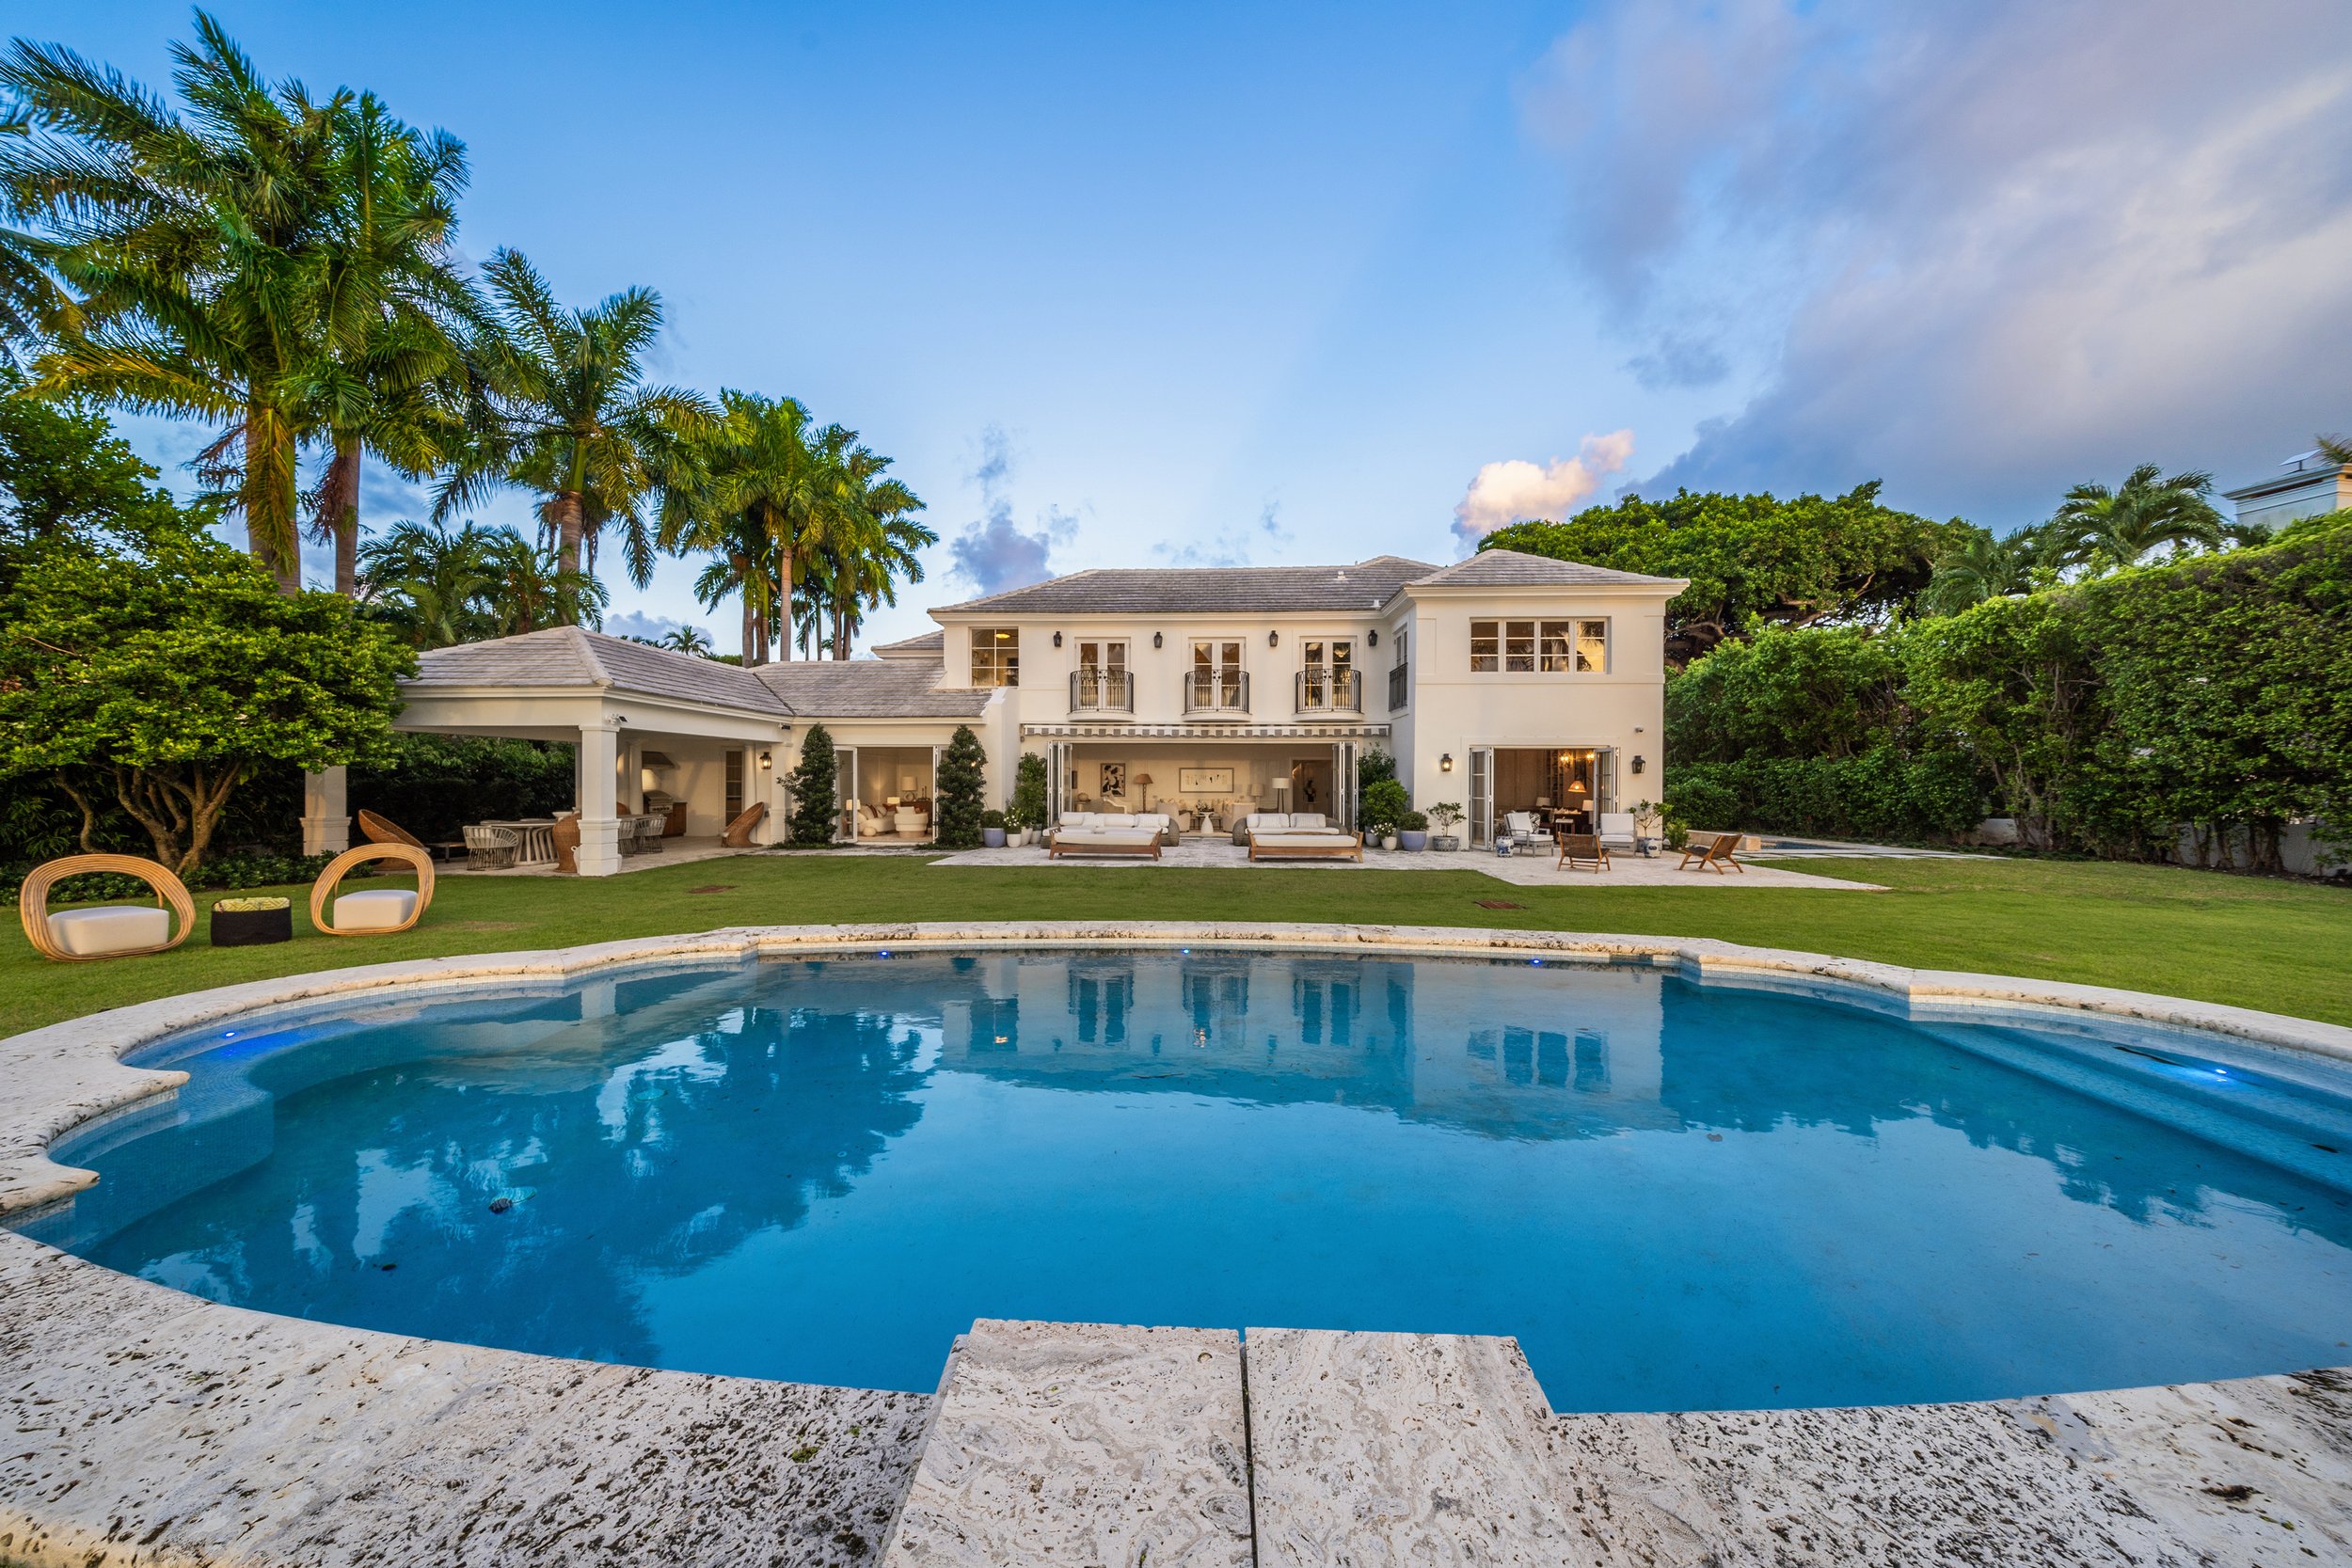 Tory Burch Co-Founder Lists Lavish Miami Beach Estate For $49 Million 11.jpg